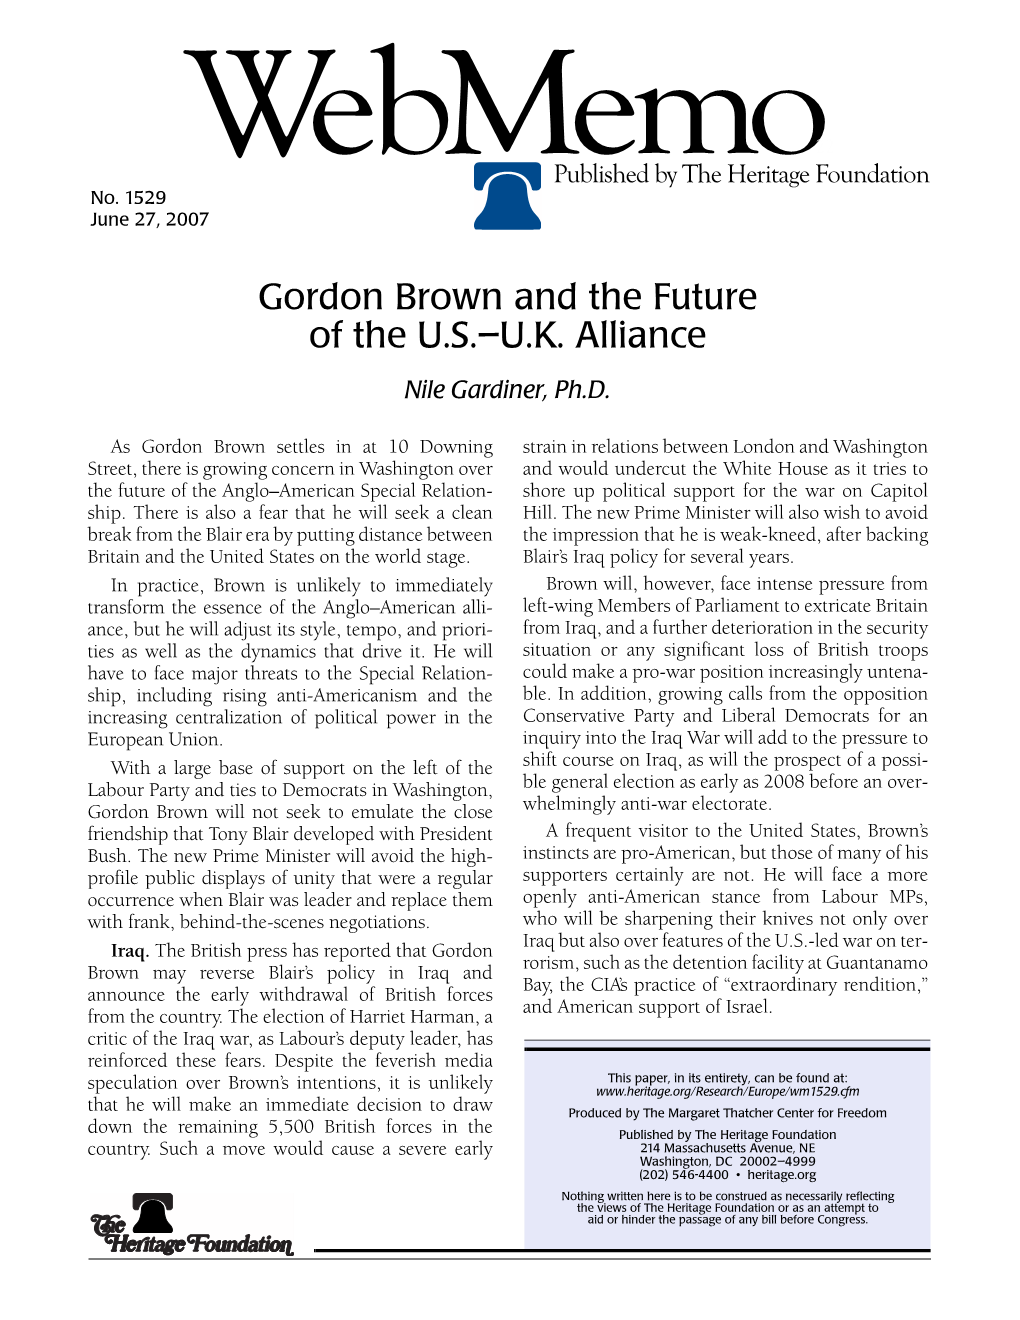 Gordon Brown and the Future of the U.S.–U.K. Alliance Nile Gardiner, Ph.D